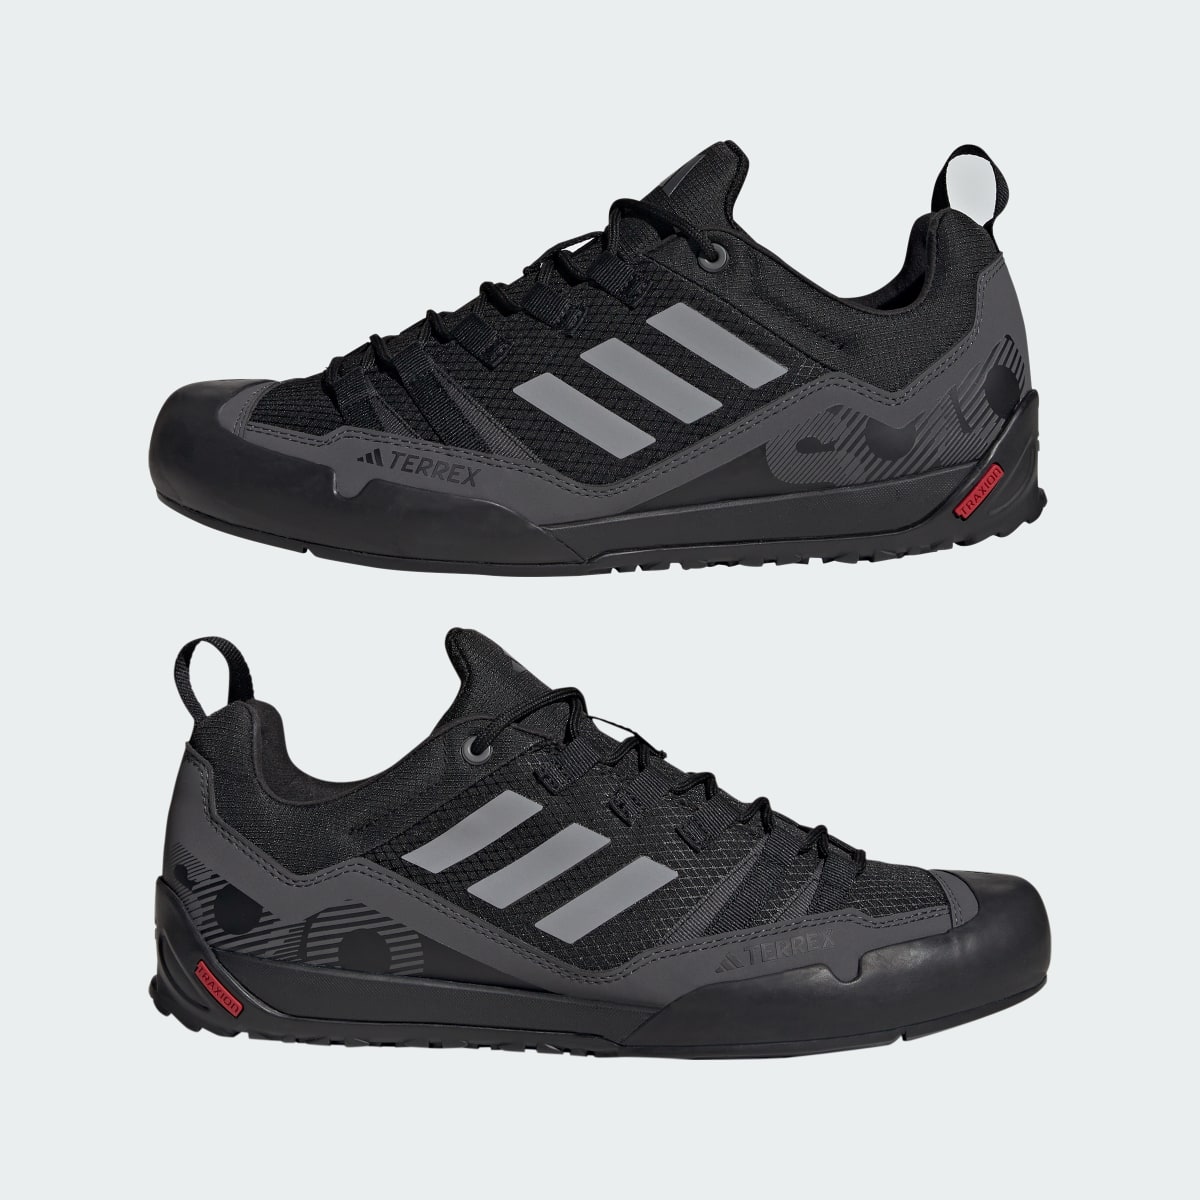 Adidas Chaussure de randonnée Terrex Swift Solo 2.0. 11